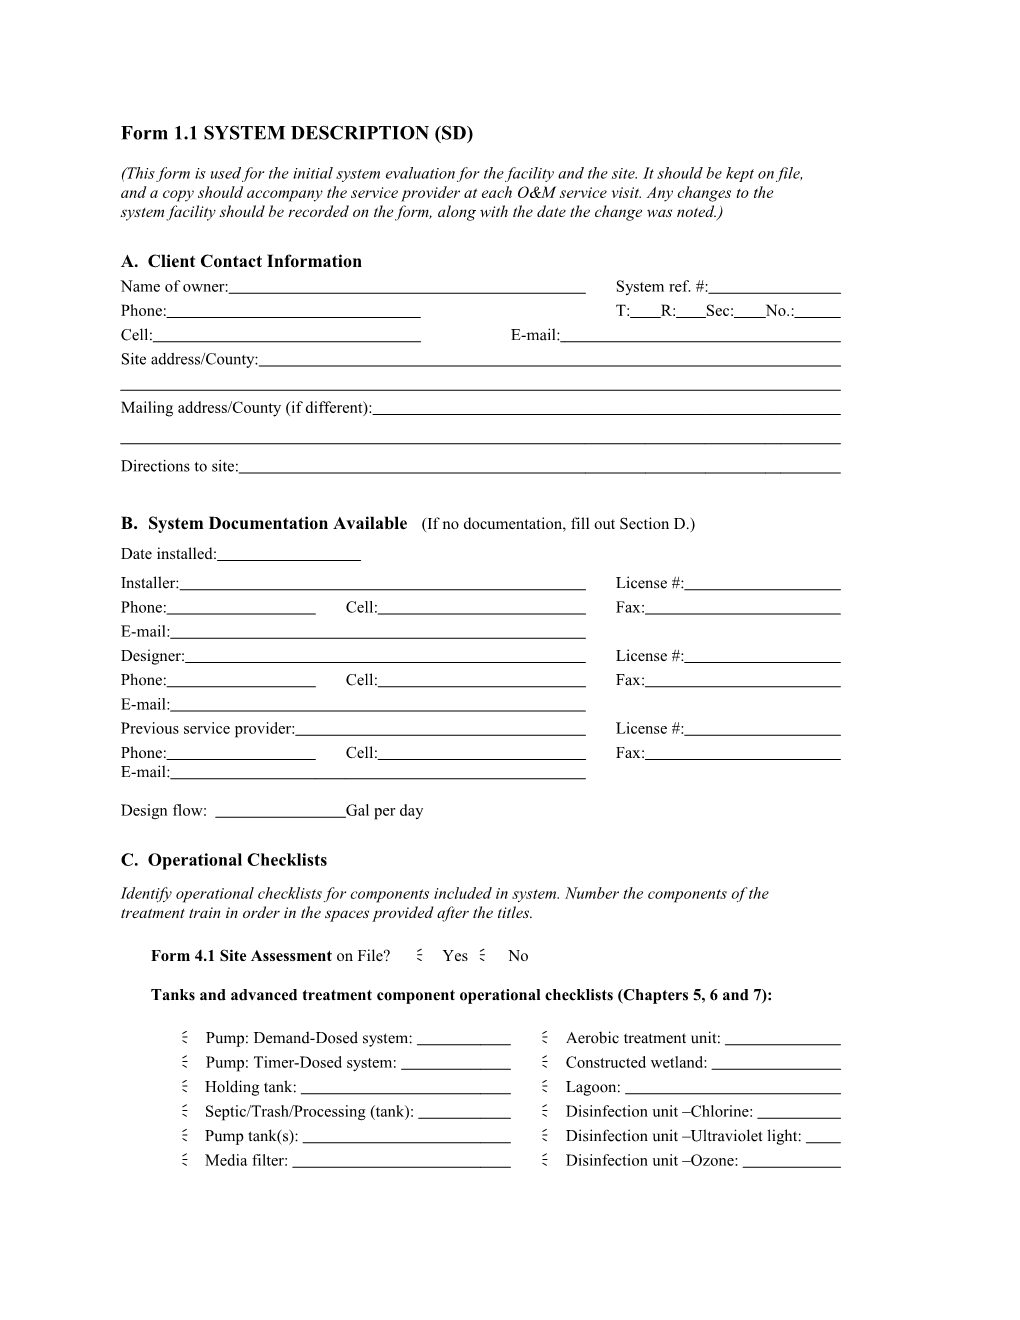 Form 1.1 SYSTEM DESCRIPTION (SD)